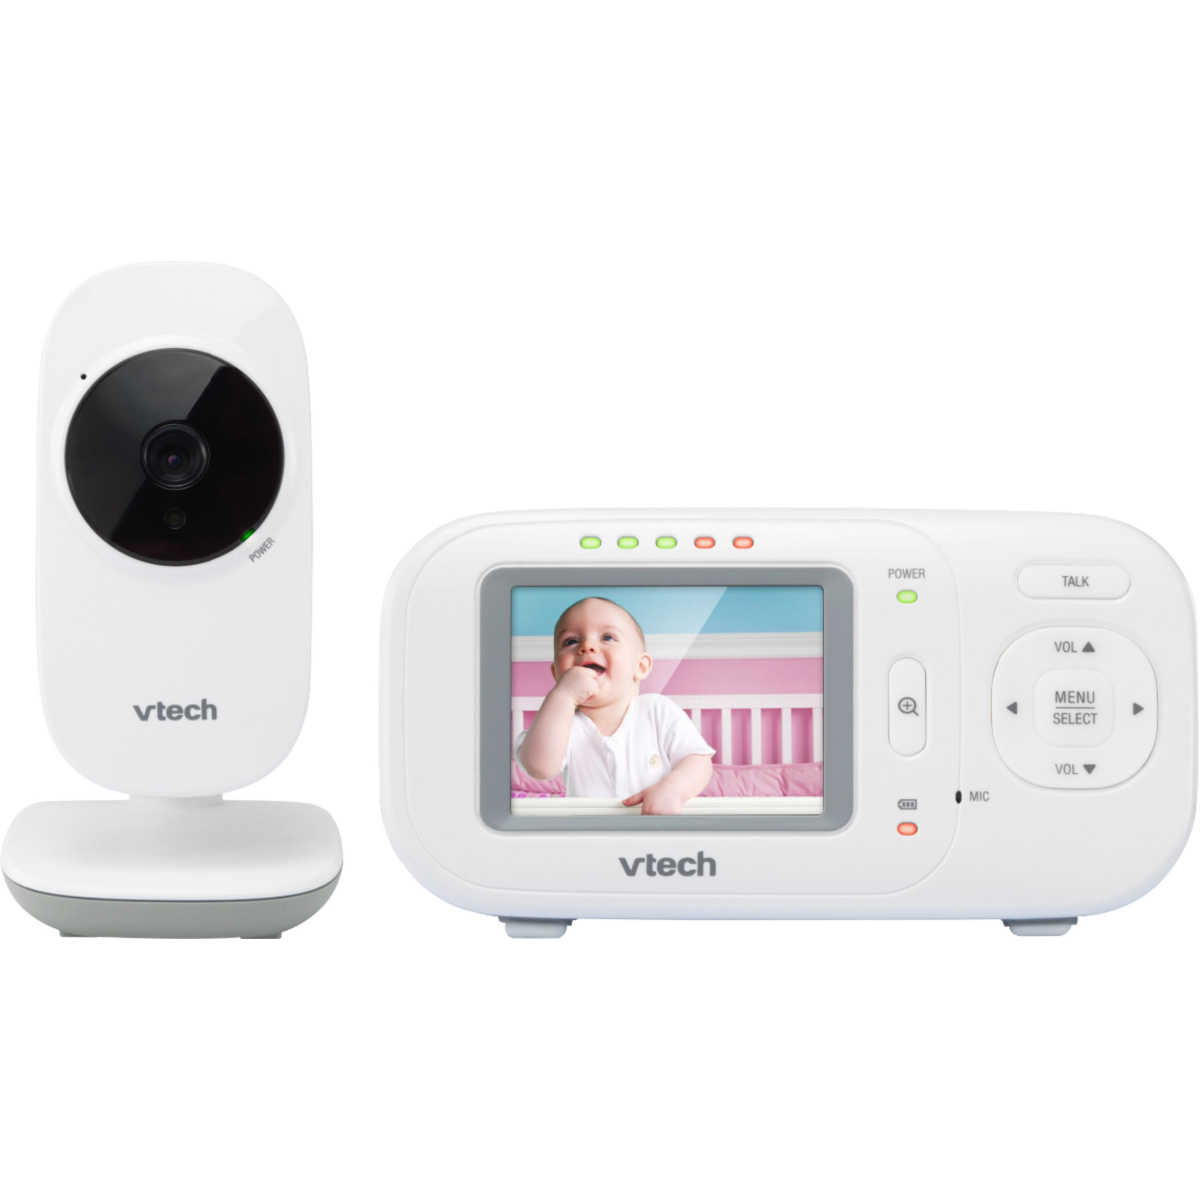 VTech VM2251 Video Baby Monitor